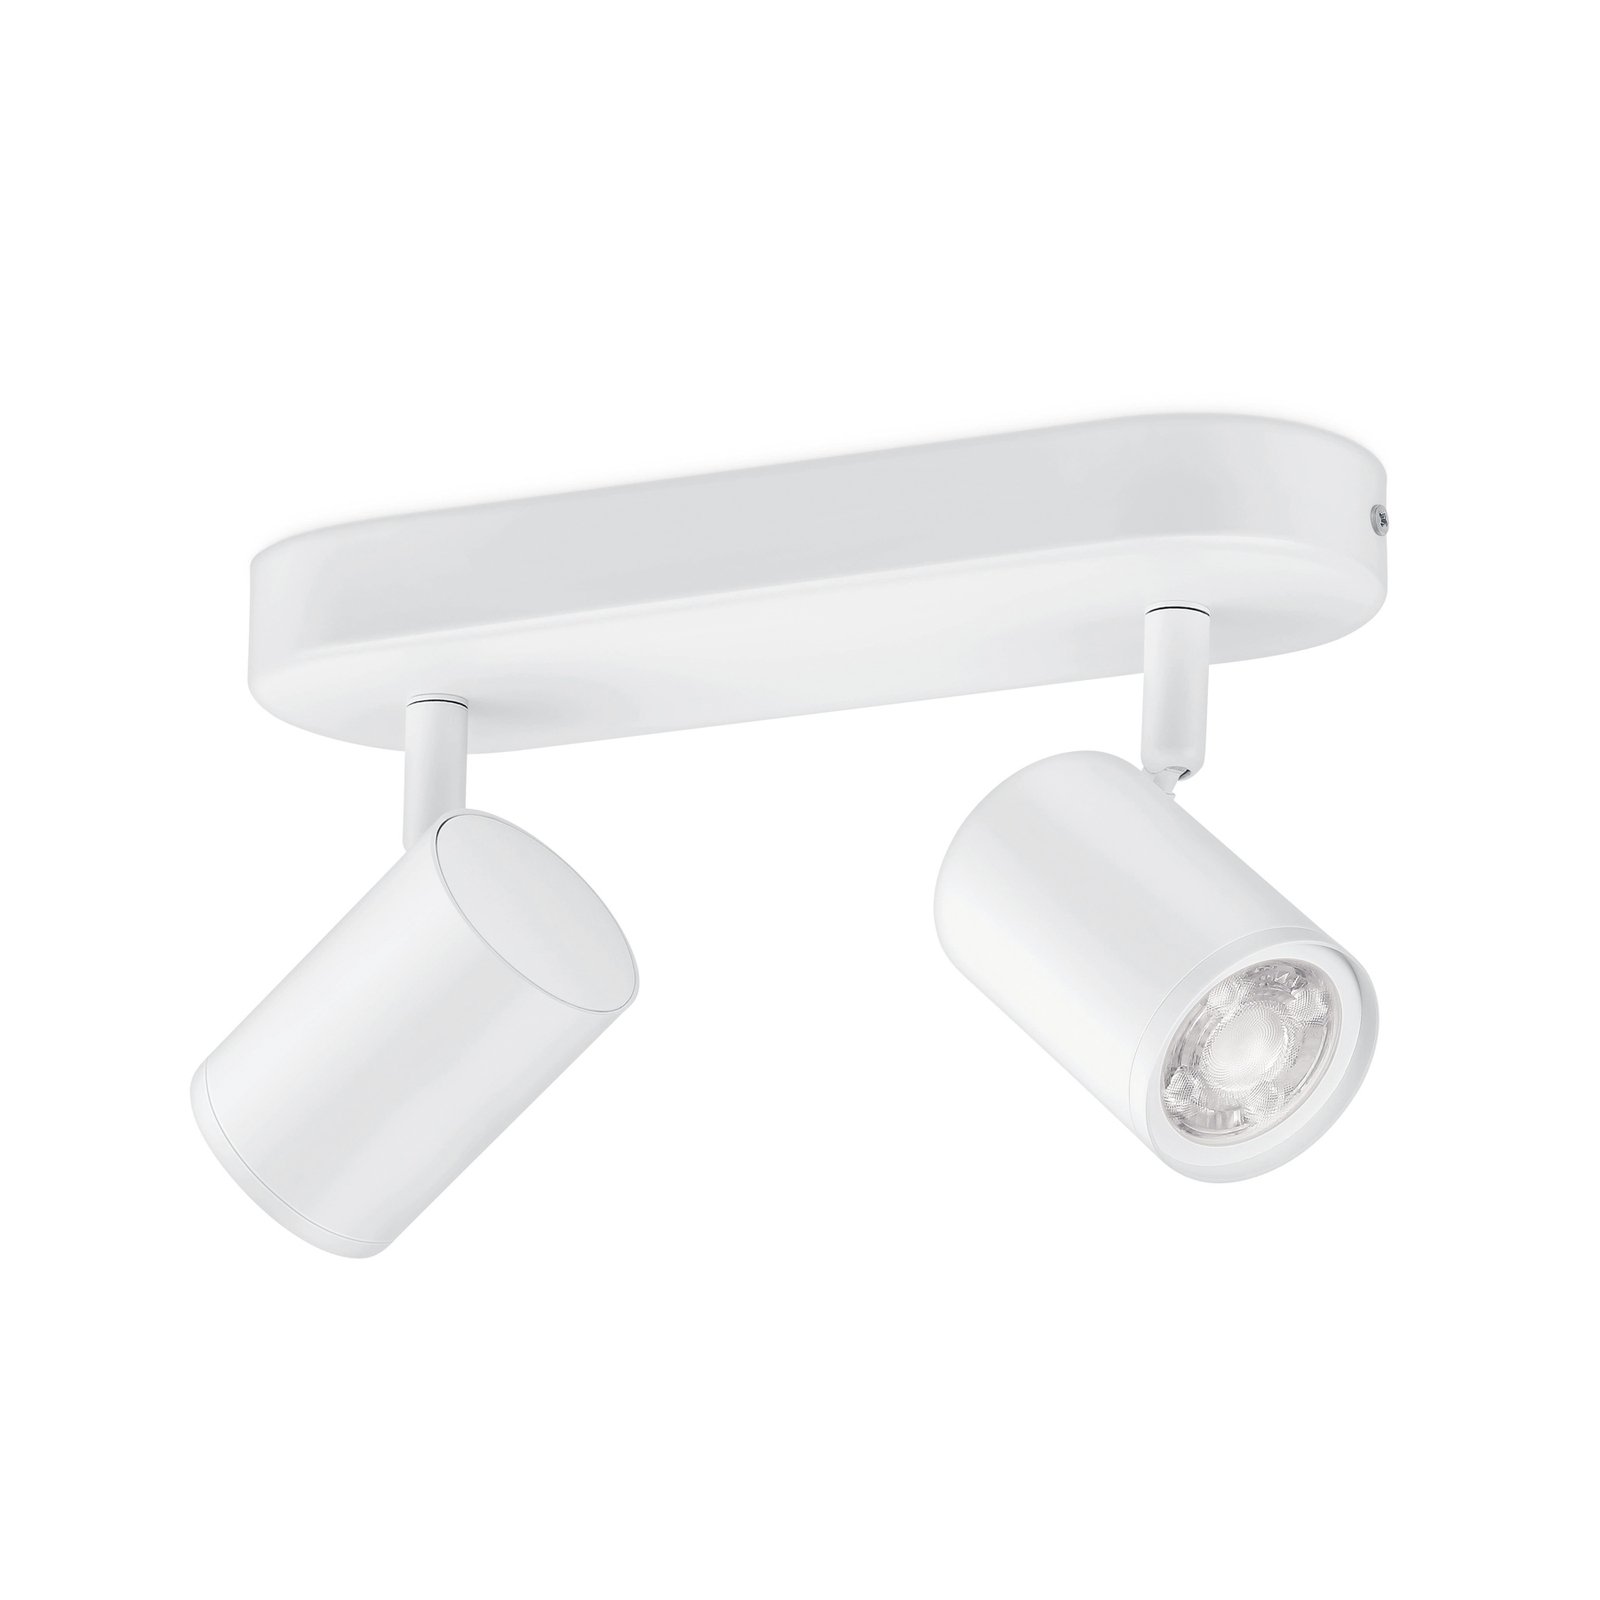 WiZ Imageo spot LED, 2 lampes, RVB, blanc